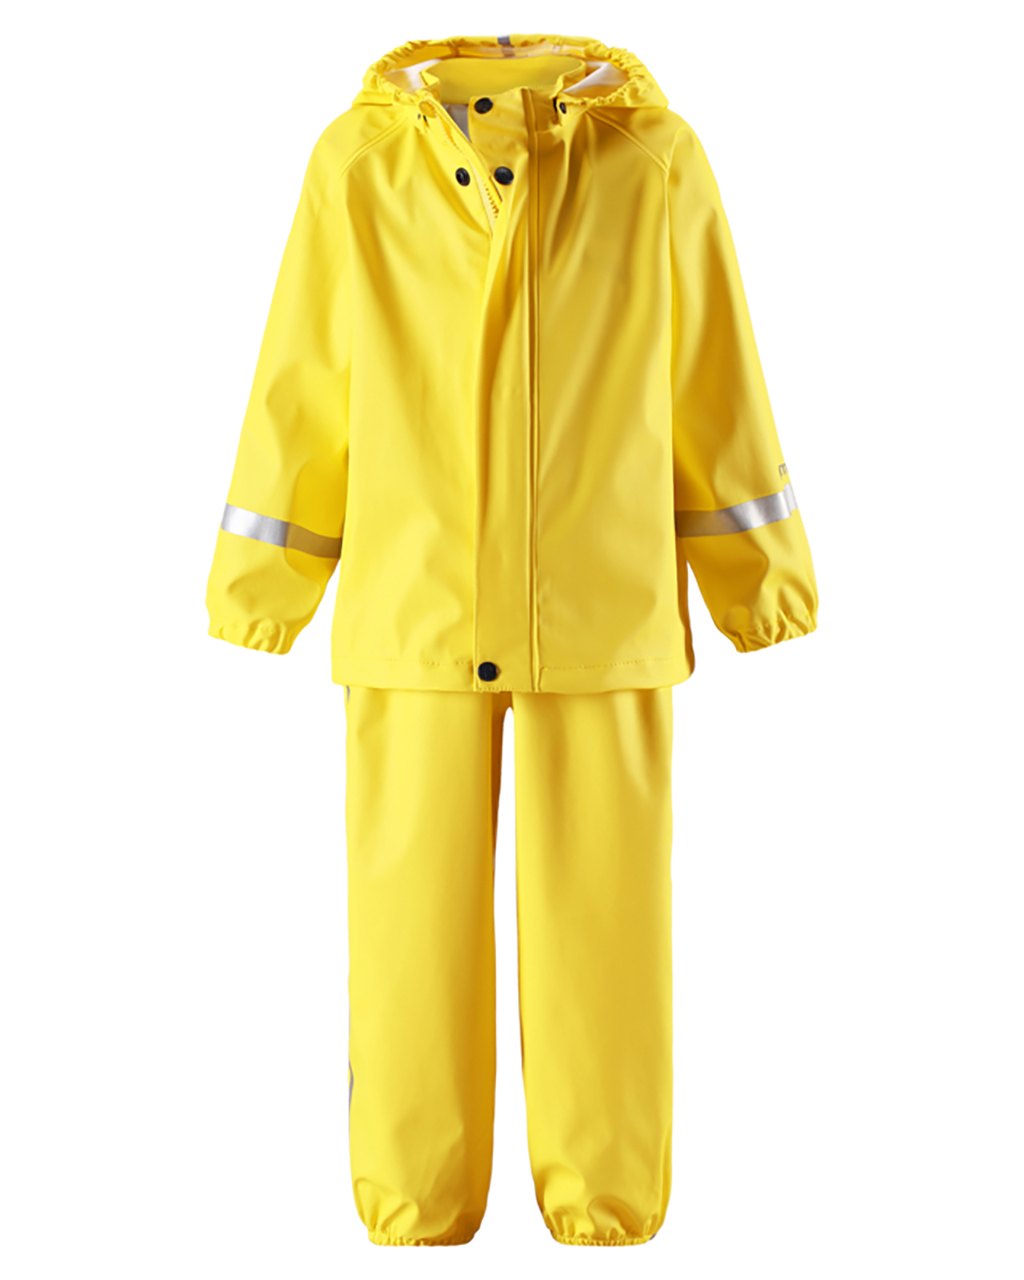 Reima Rain Outfit JR Tihku Yellow (Storlek 110)